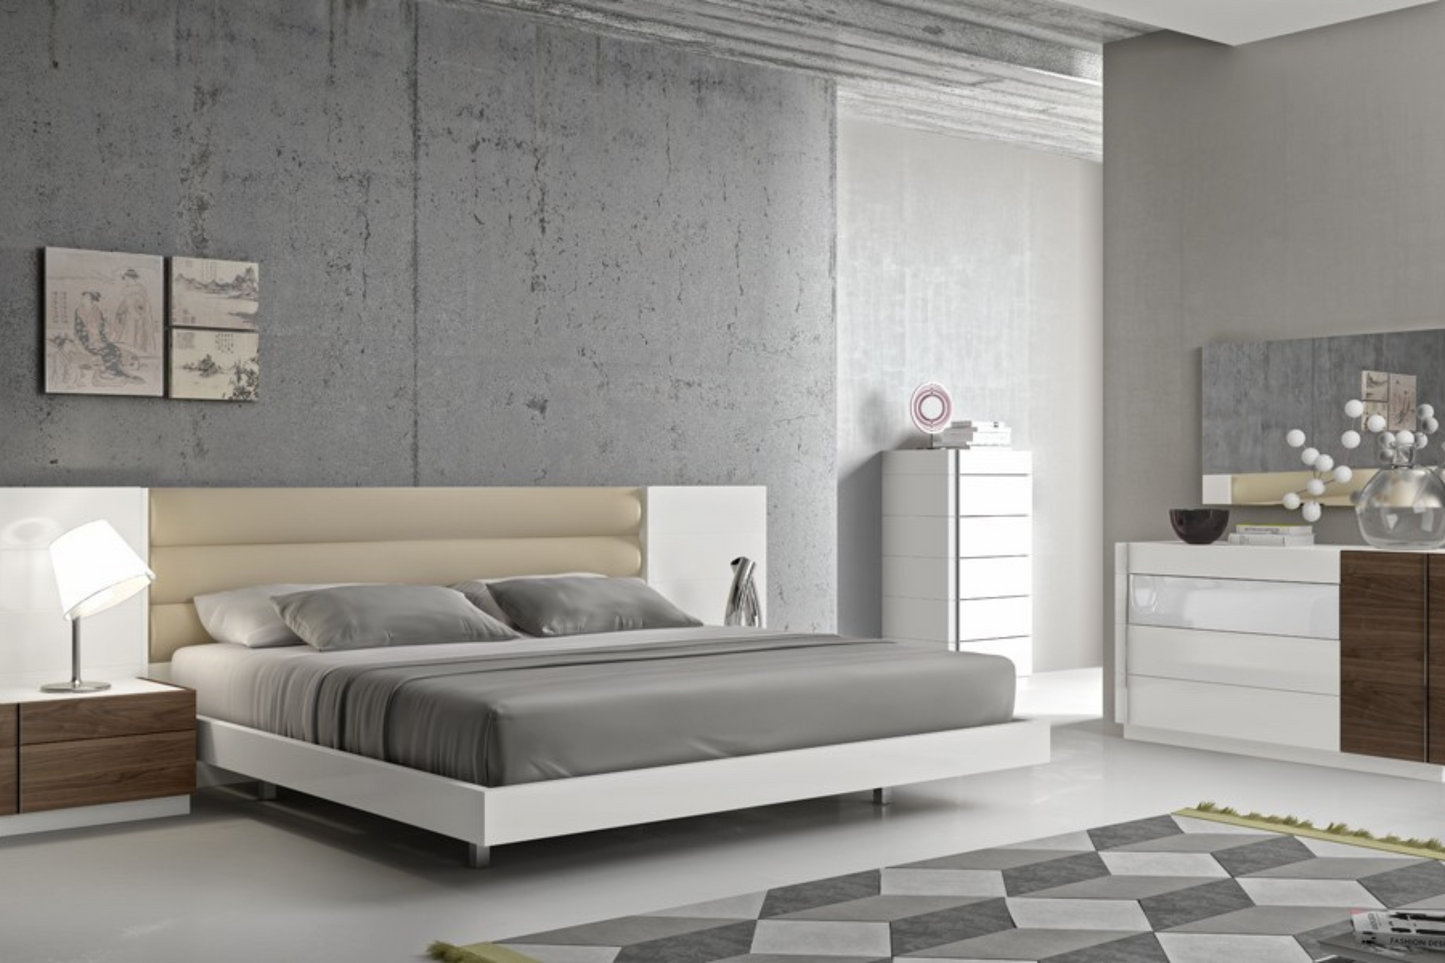 Lisbon Premium Bedroom Nighstand SKU: 17871